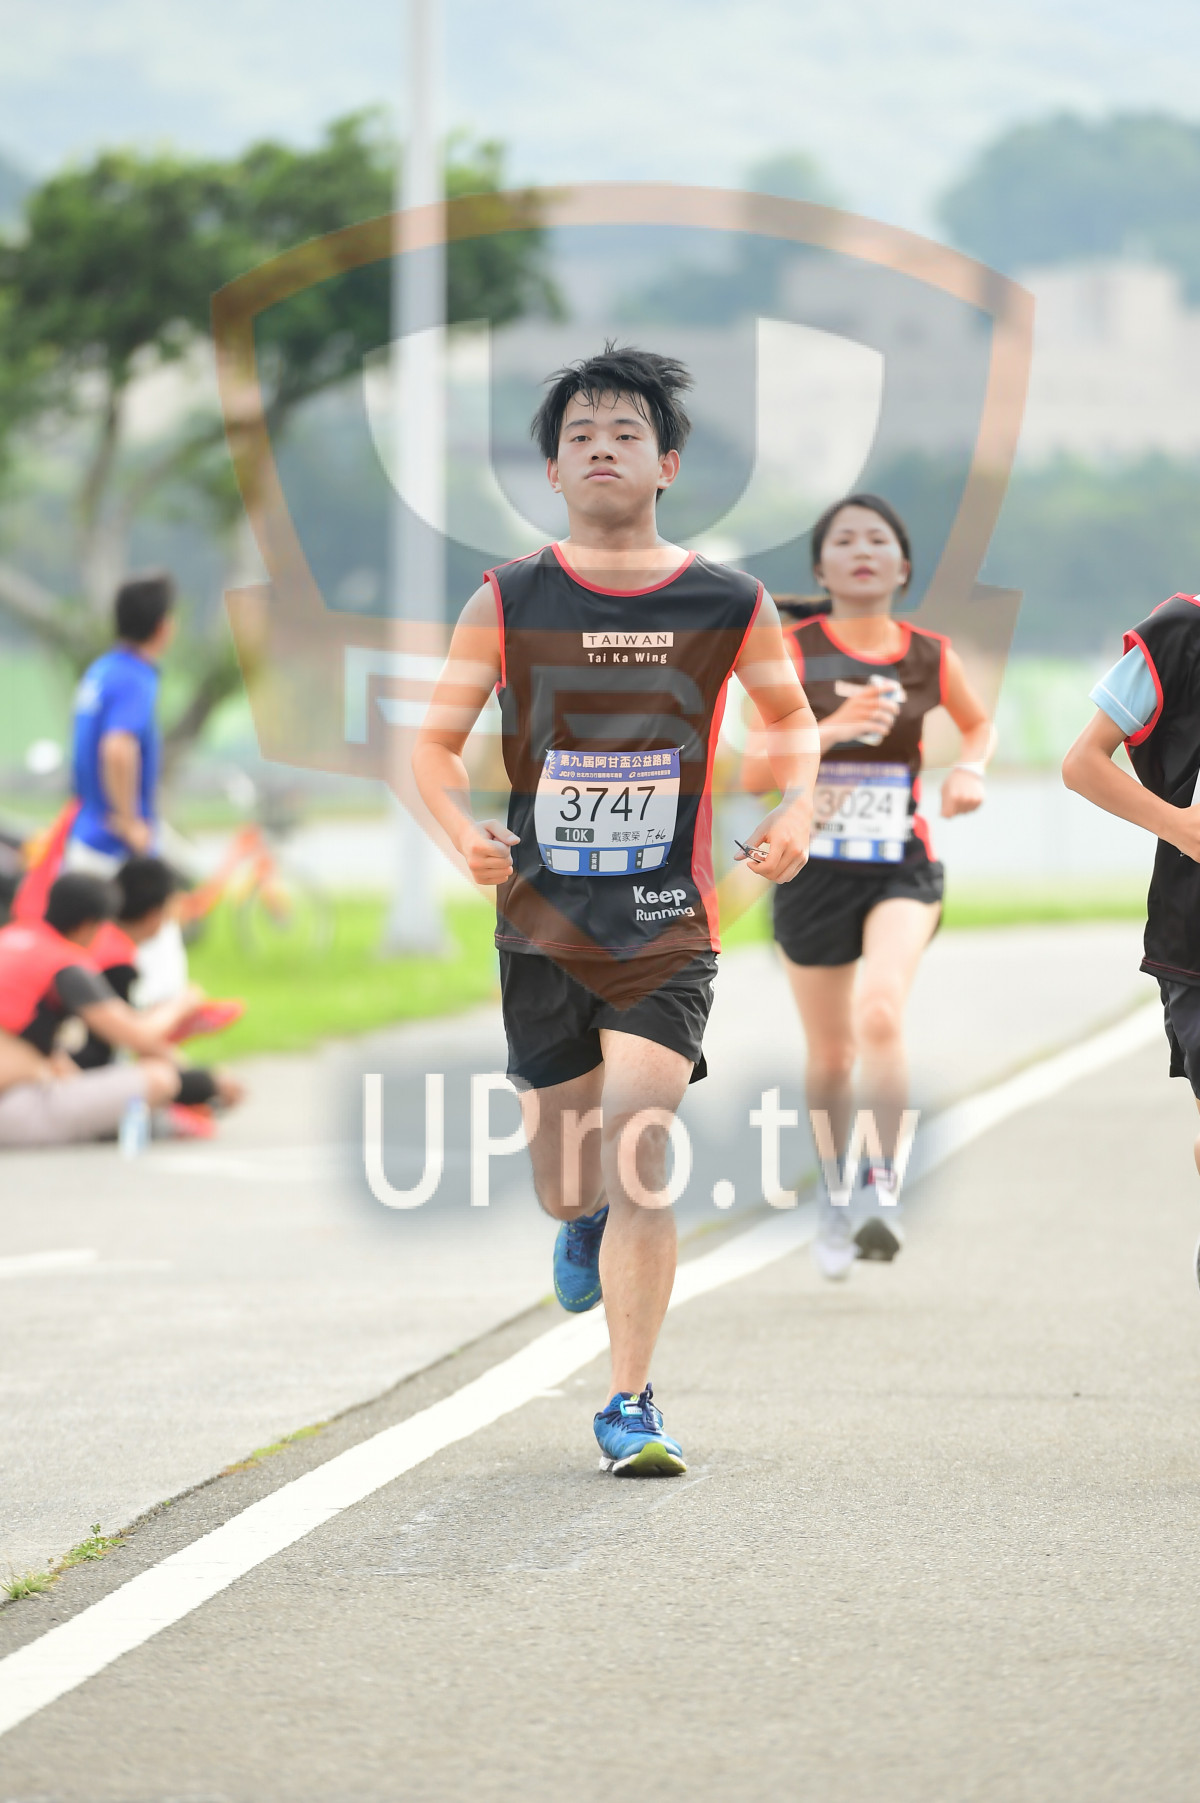 TAIWAN,Tai Ka Wing,,3747,3024,10K,Keep,Running|終點1|中年人